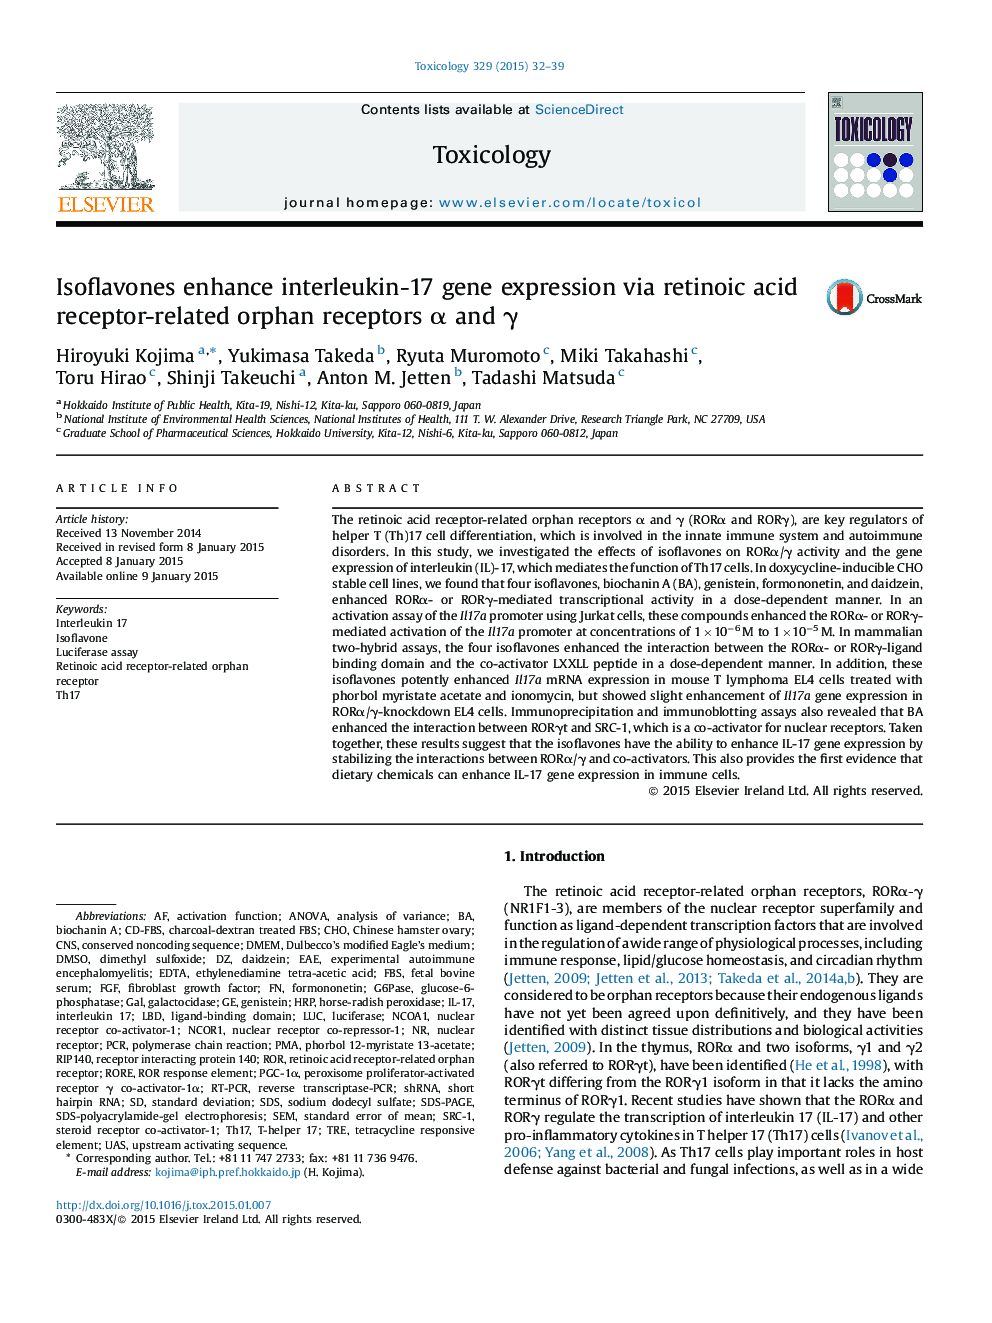 Isoflavones enhance interleukin-17 gene expression via retinoic acid receptor-related orphan receptors Î± and Î³